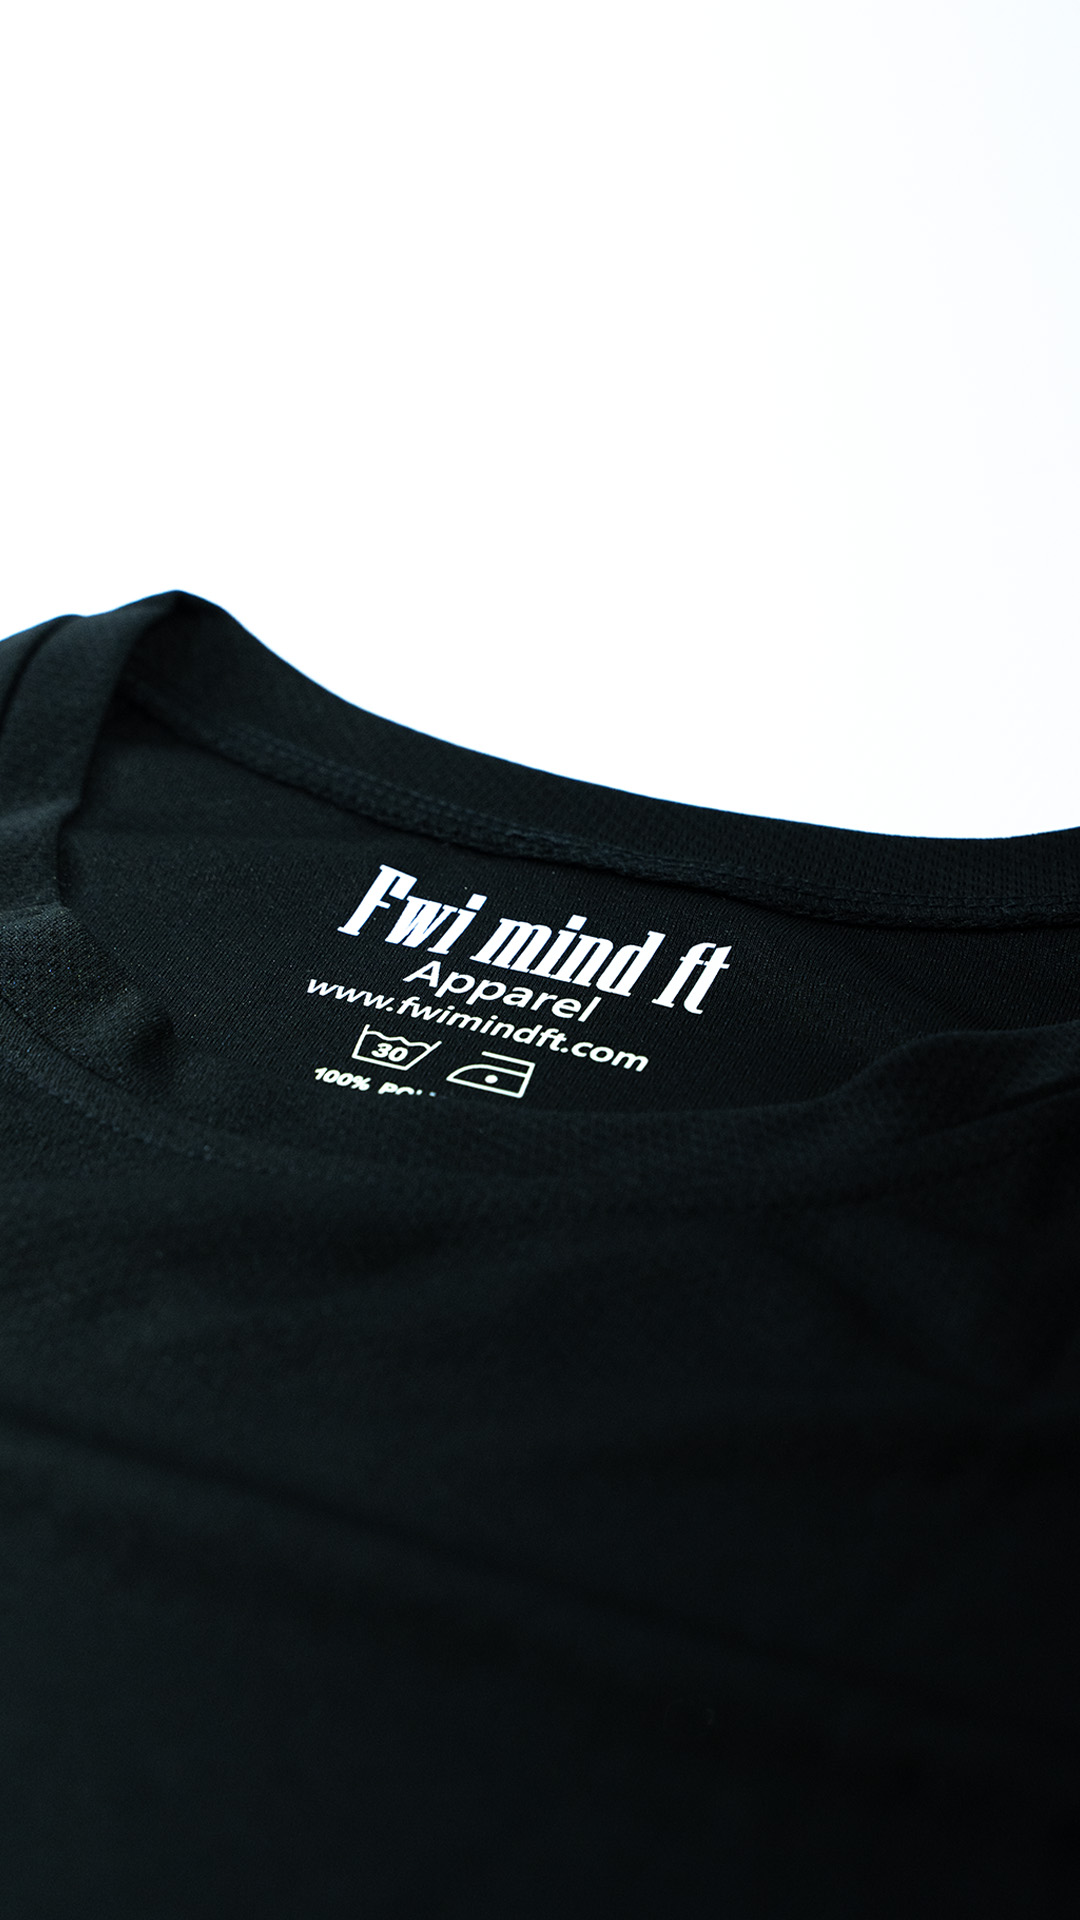 Tee shirt homme Sport et Lifestyle 100% polyester (Blanc ou Noir